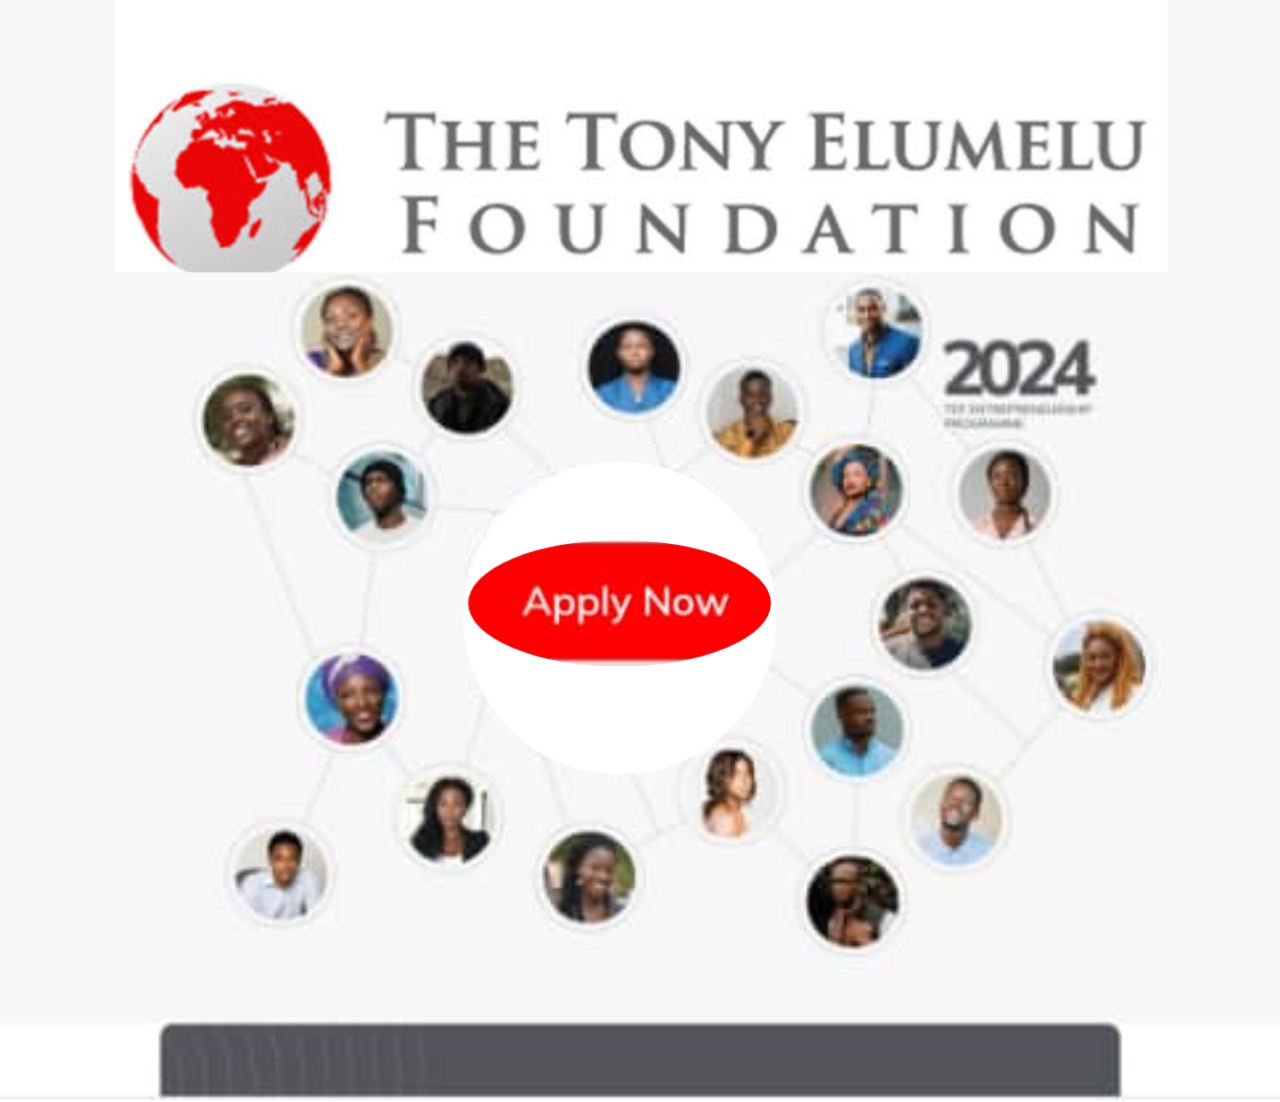 Tony Elumelu Foundation Entrepreneurship